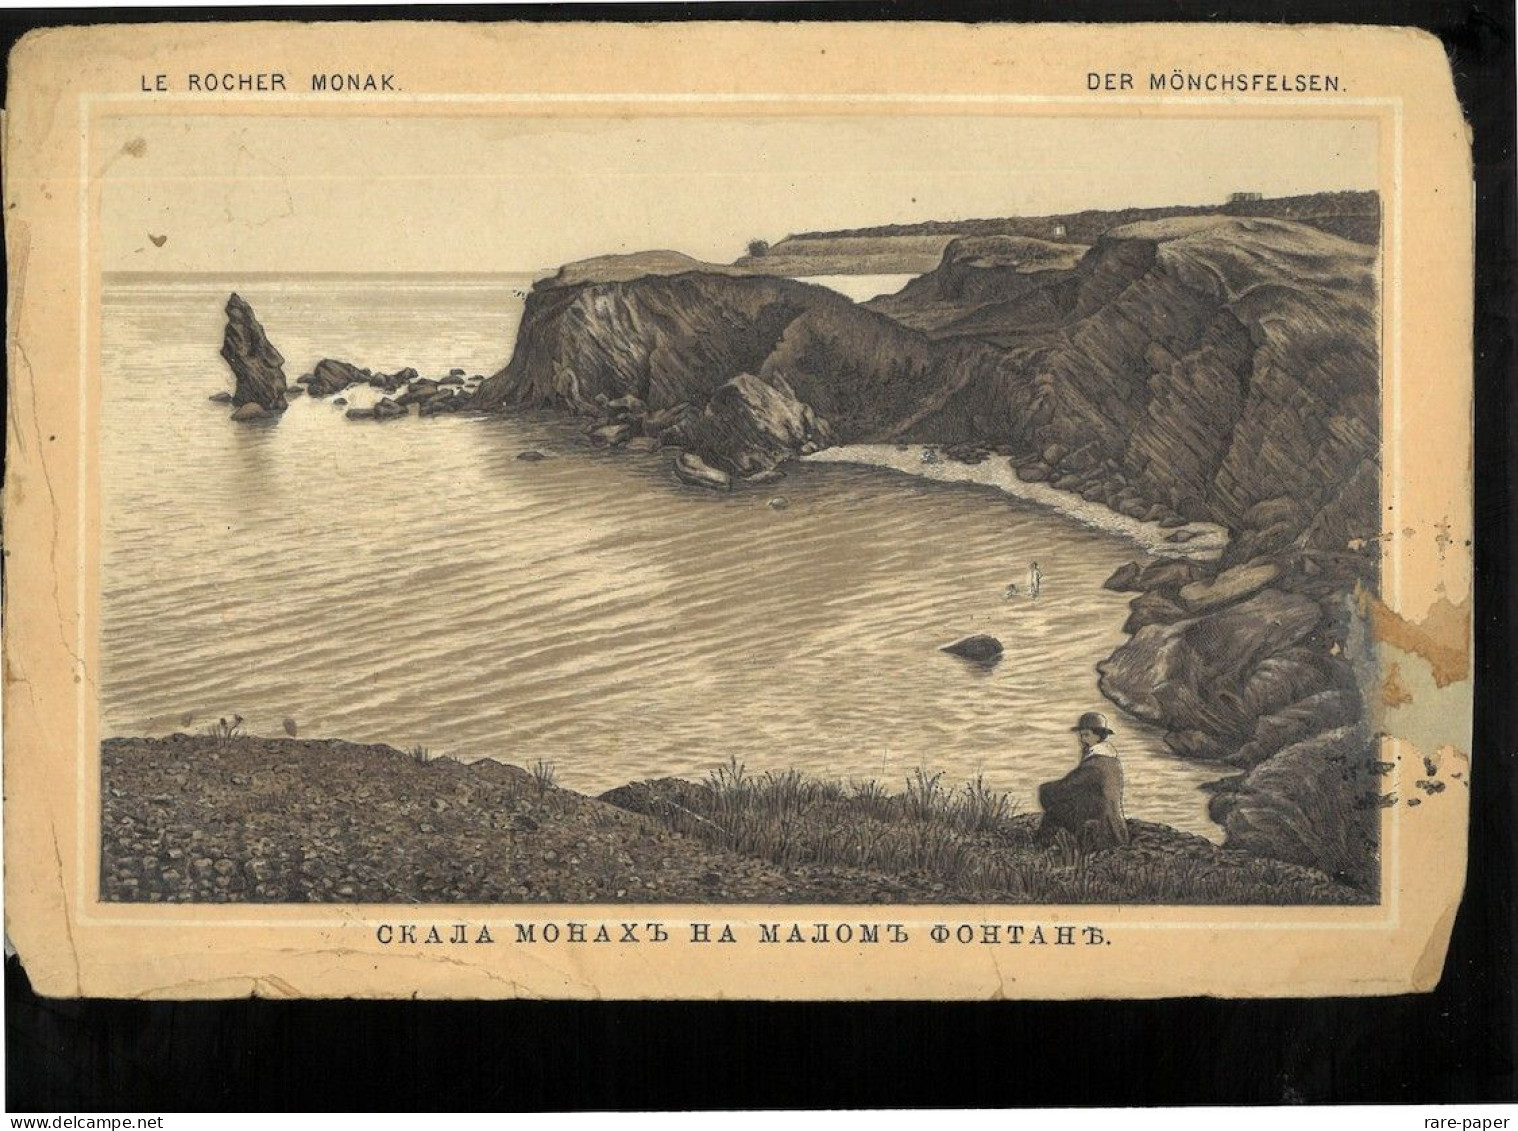 Russian Album "ОДЕССА - Souvenir d'Odessa" (Odesa, Ukraine) 25 x Early Lithographs, circa 1890s (19.5 x 13 cm)